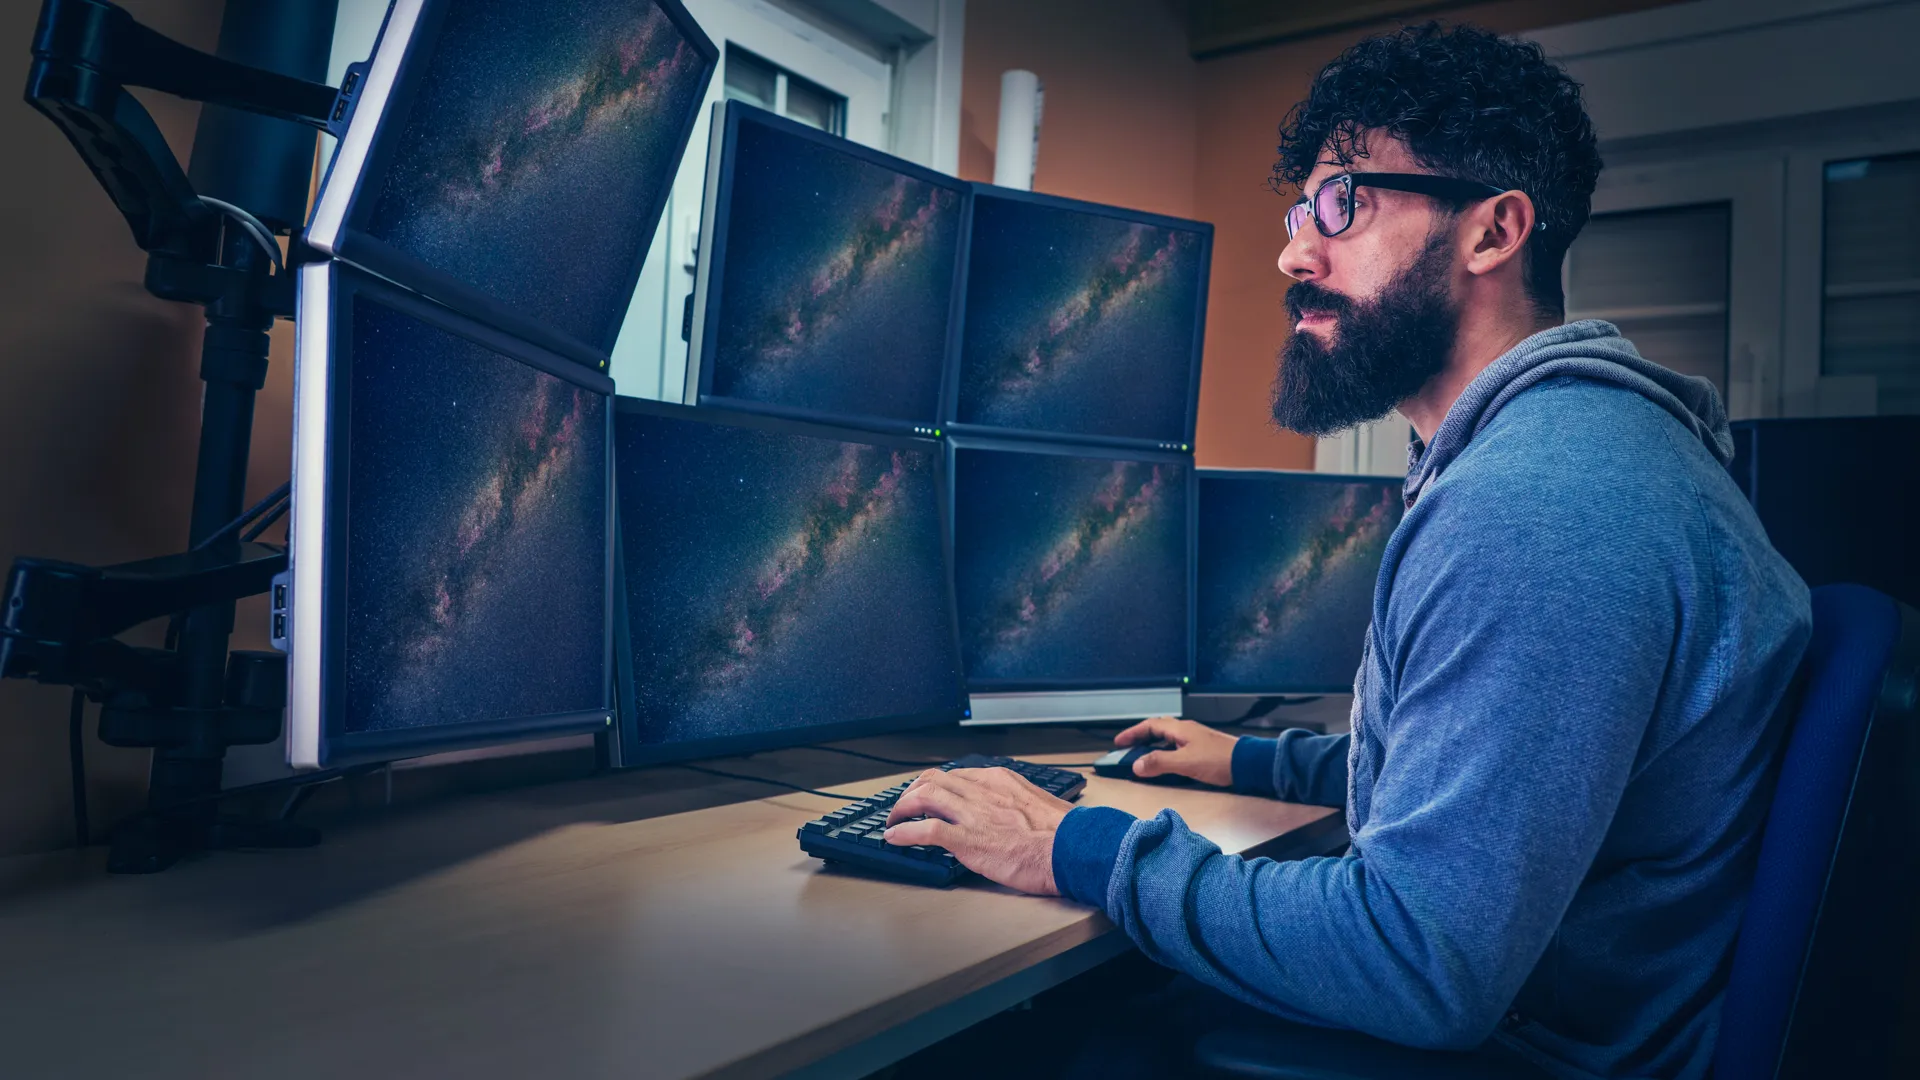 Astronomer in control panel room multi screen sitting profile with beard.